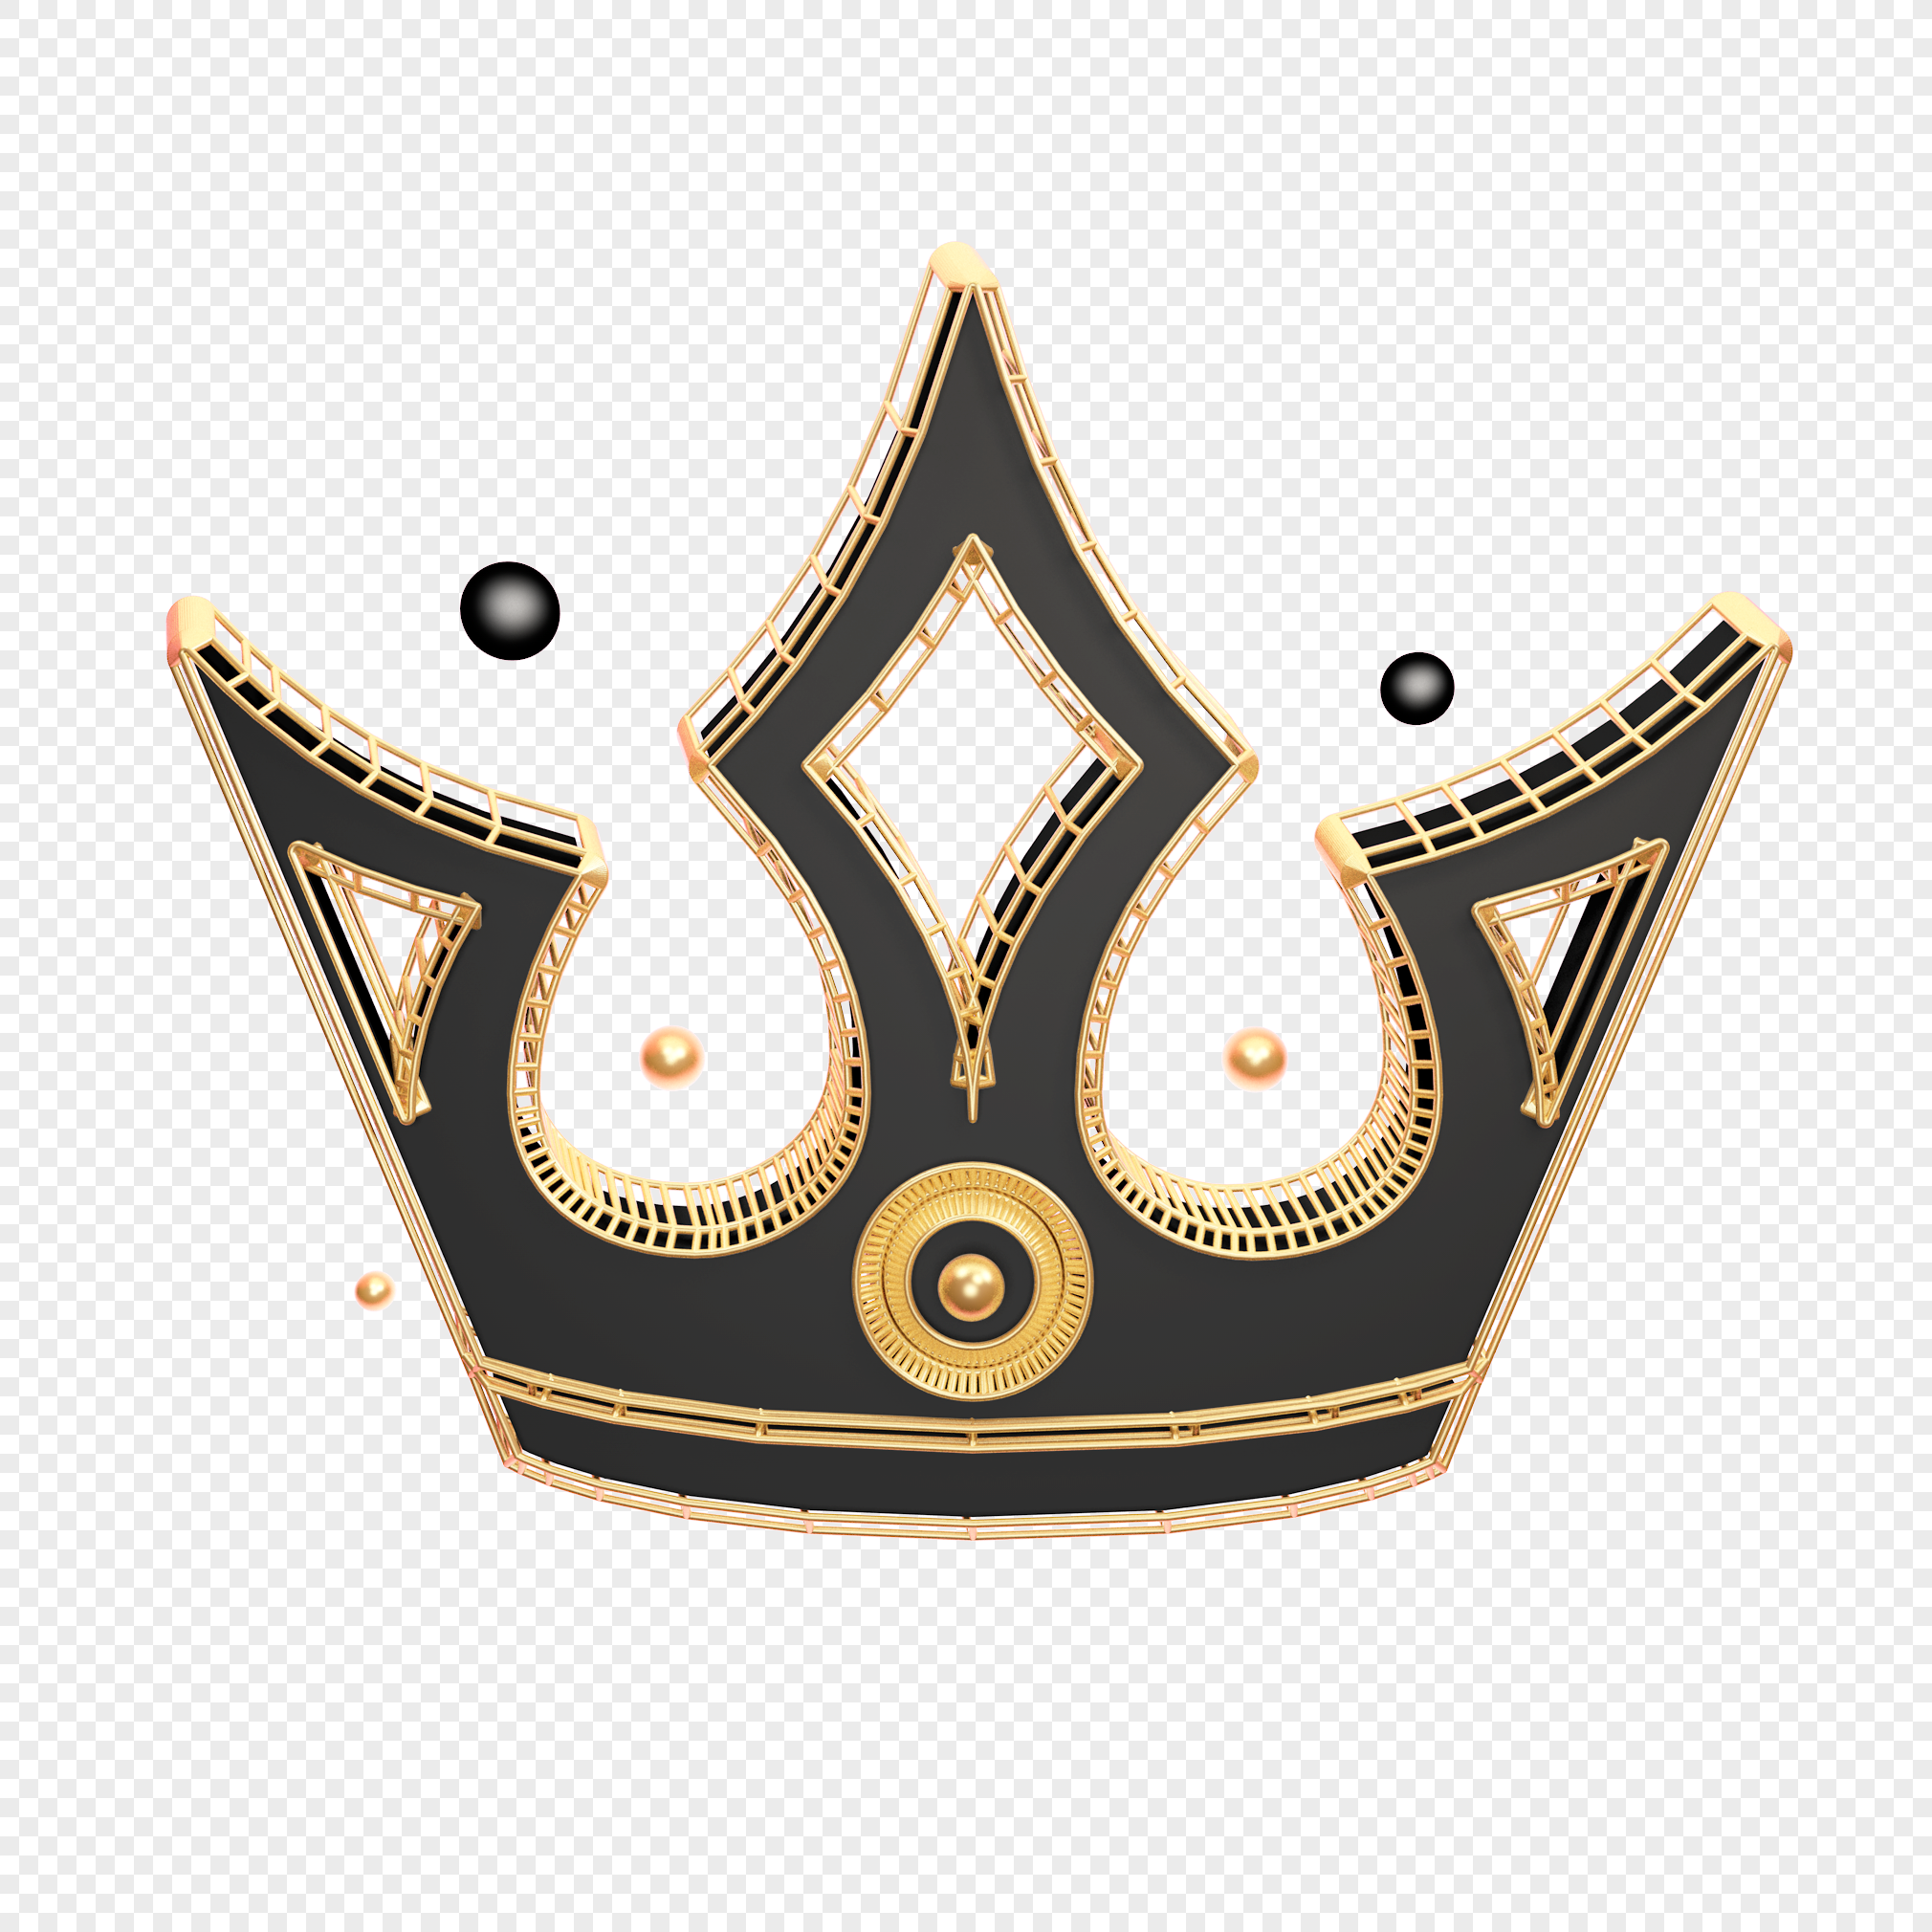 Crown Logo King Vector Hd Images, King Logo Designs With Crown, King, Logo,  Crown PNG Image For Free Download